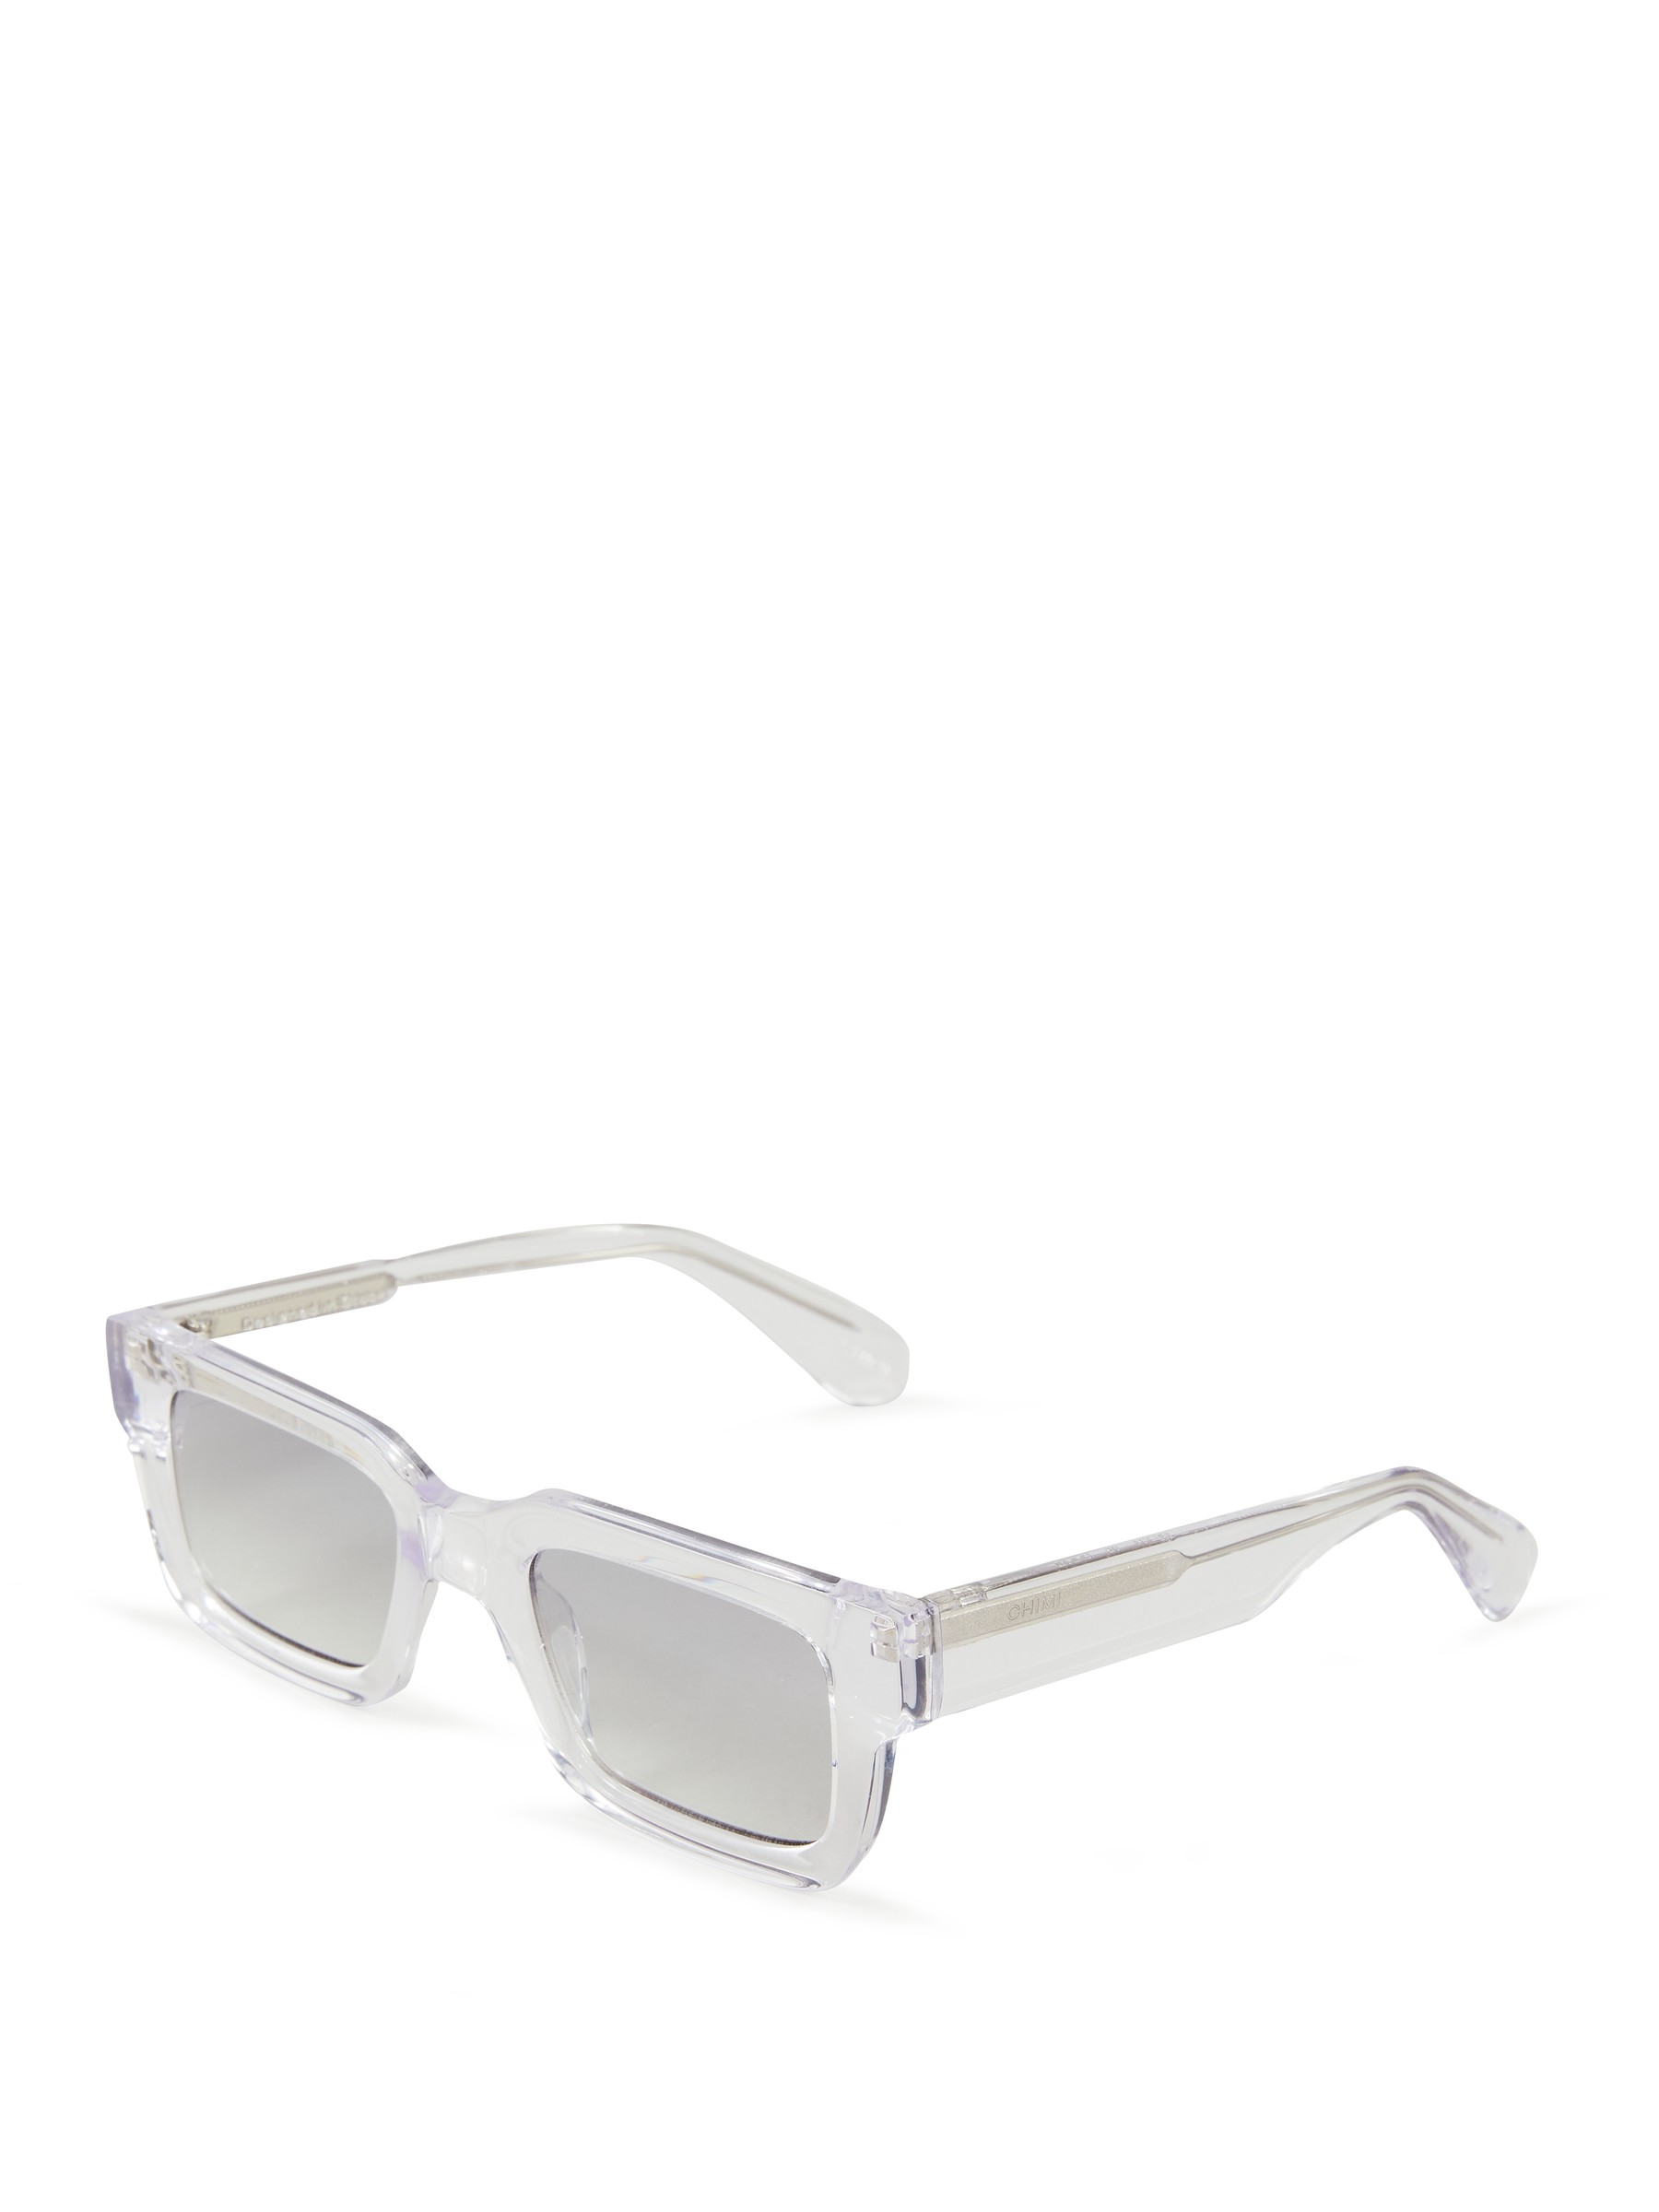 CHIMI Sunglasses 'Rectangular Bold' Transparent